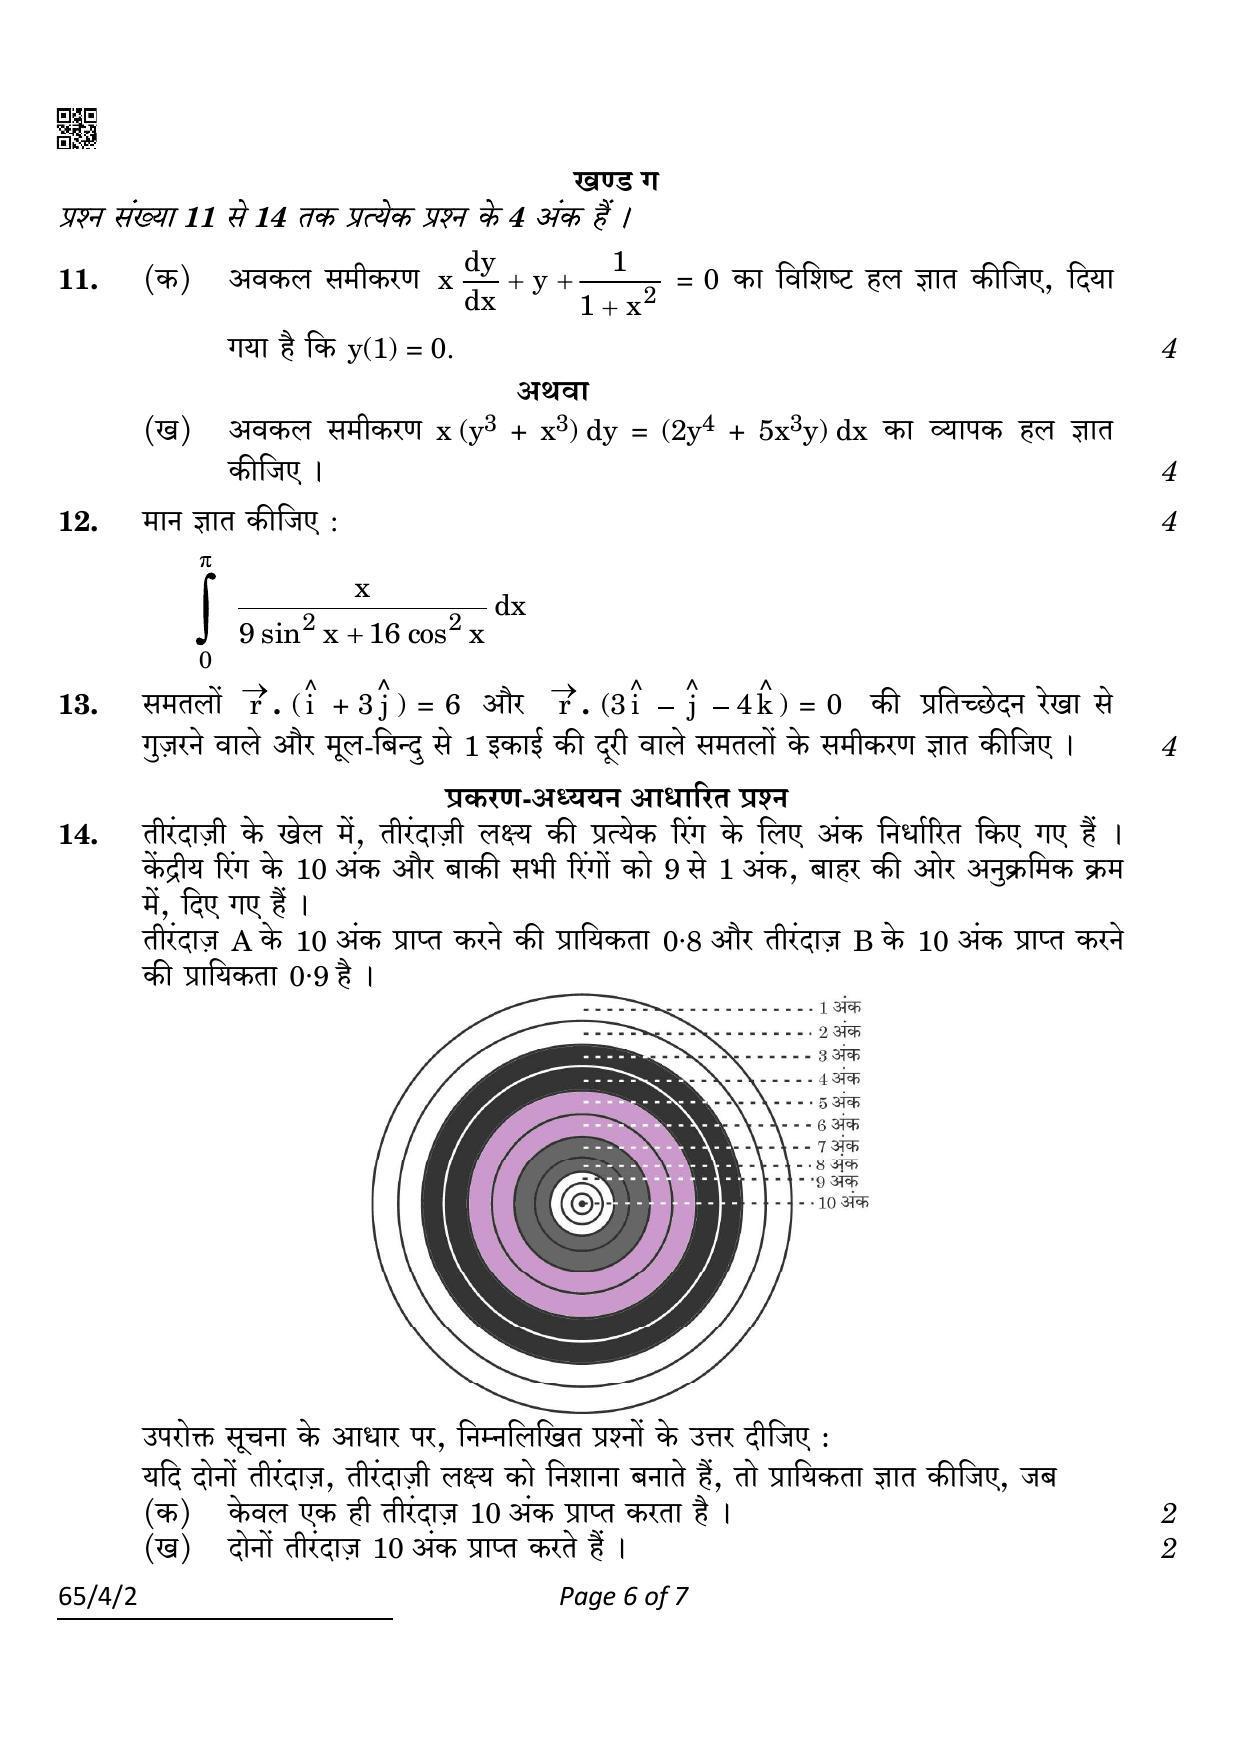 CBSE Class 12 65-4-2 Mathematics 2022 Question Paper - Page 6